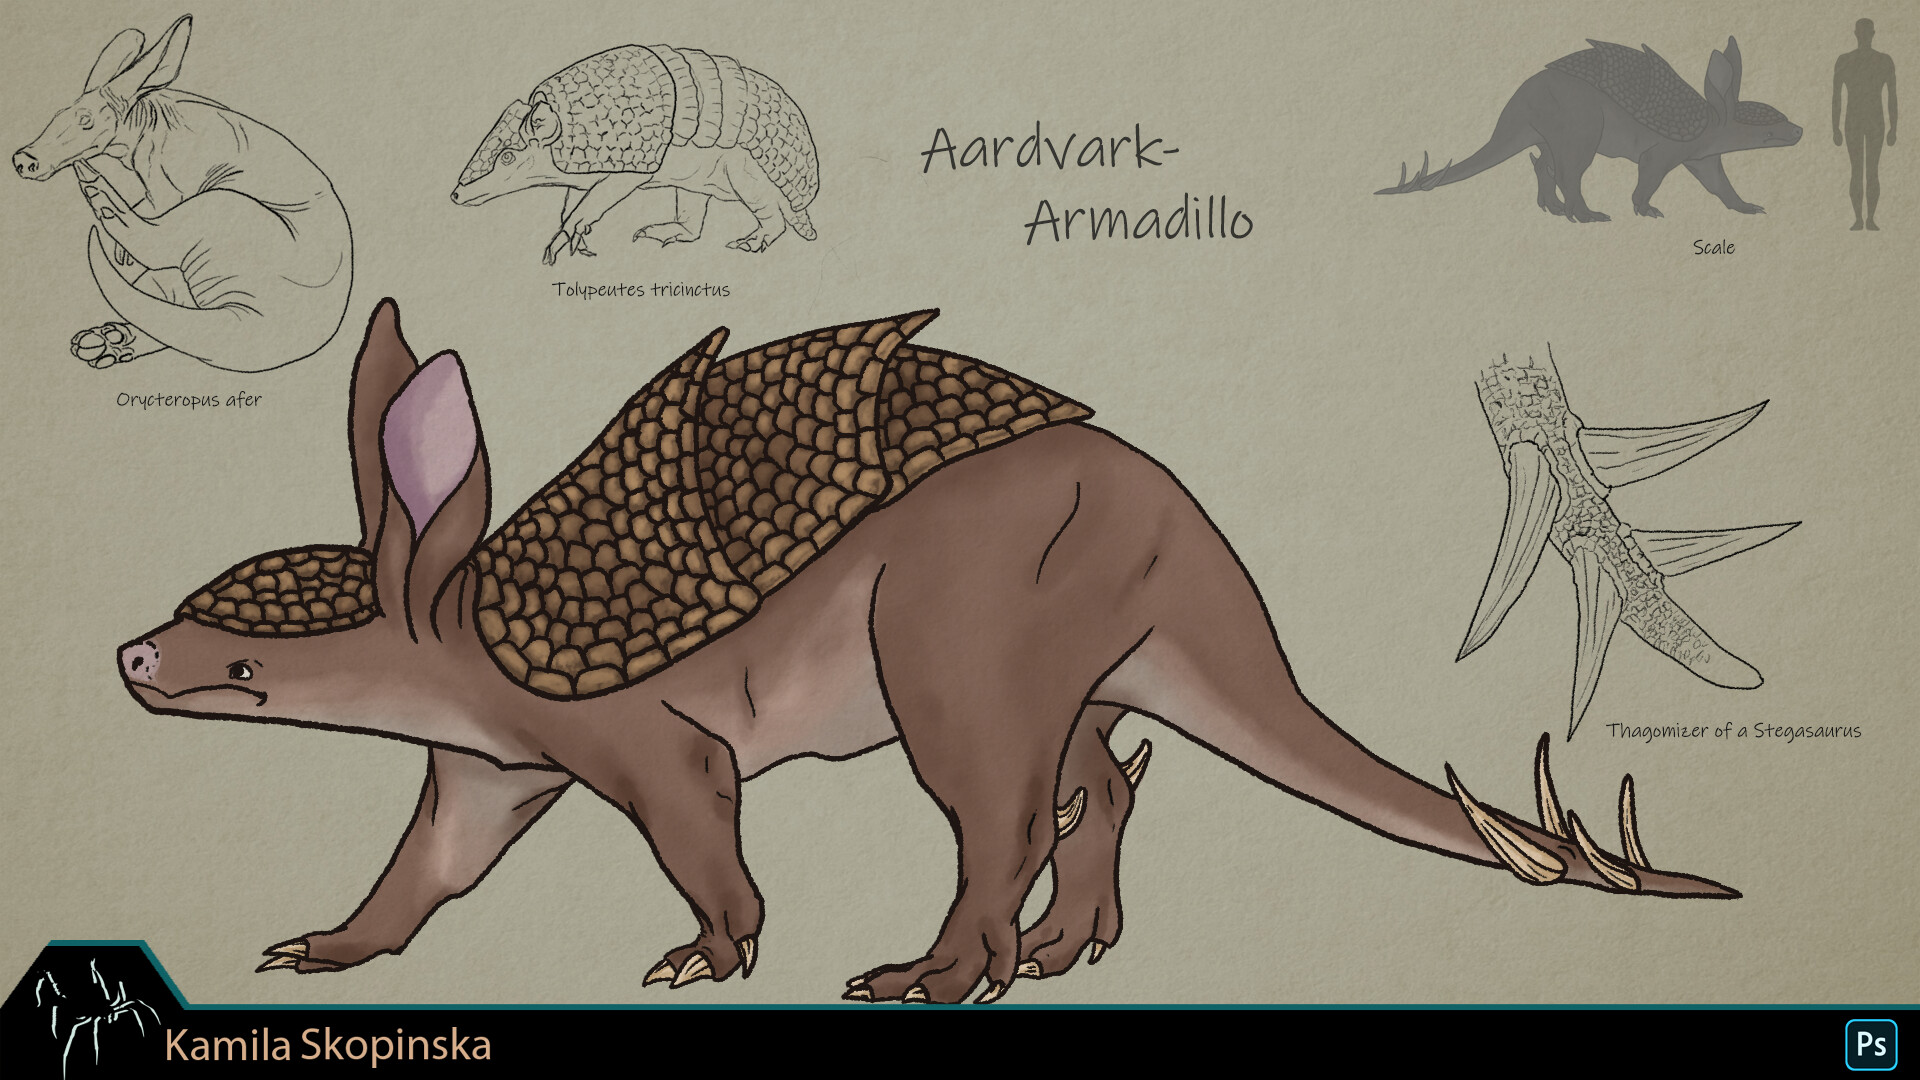 armadillo and aardvark